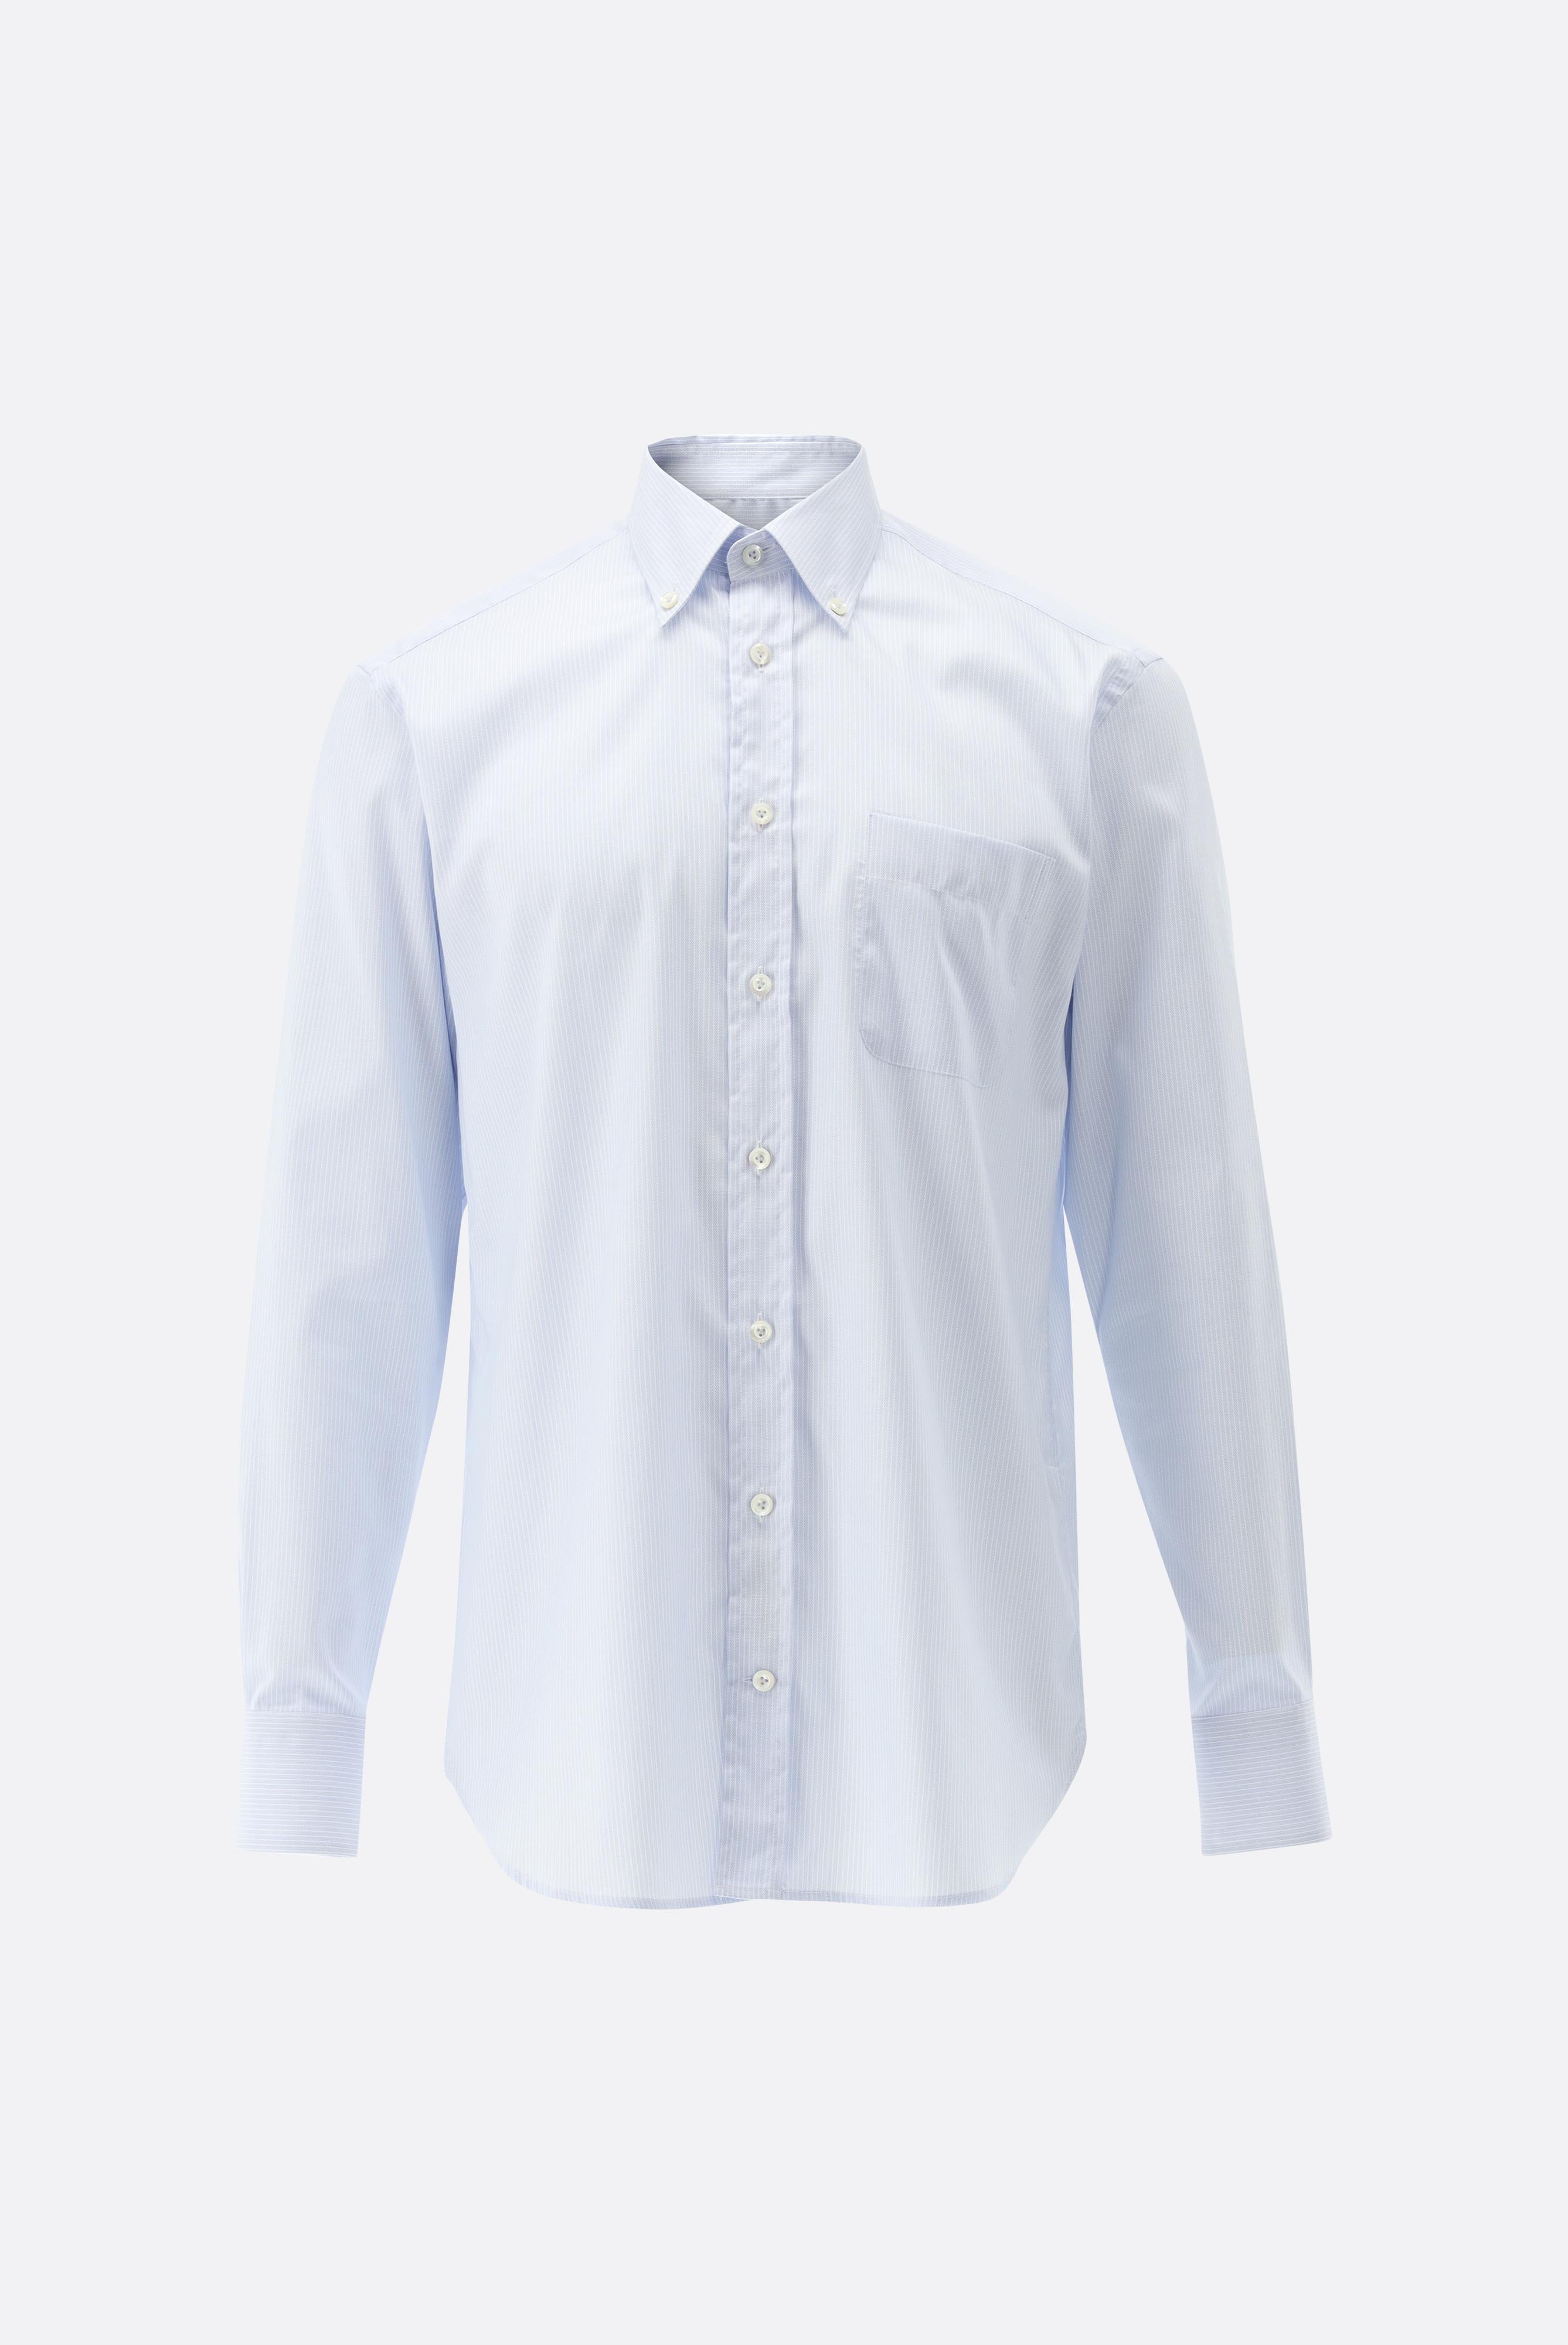 Easy Iron Shirts+Striped Wrinkle Free Shirt Comfort Fit+20.2026.BQ.161109.710.39